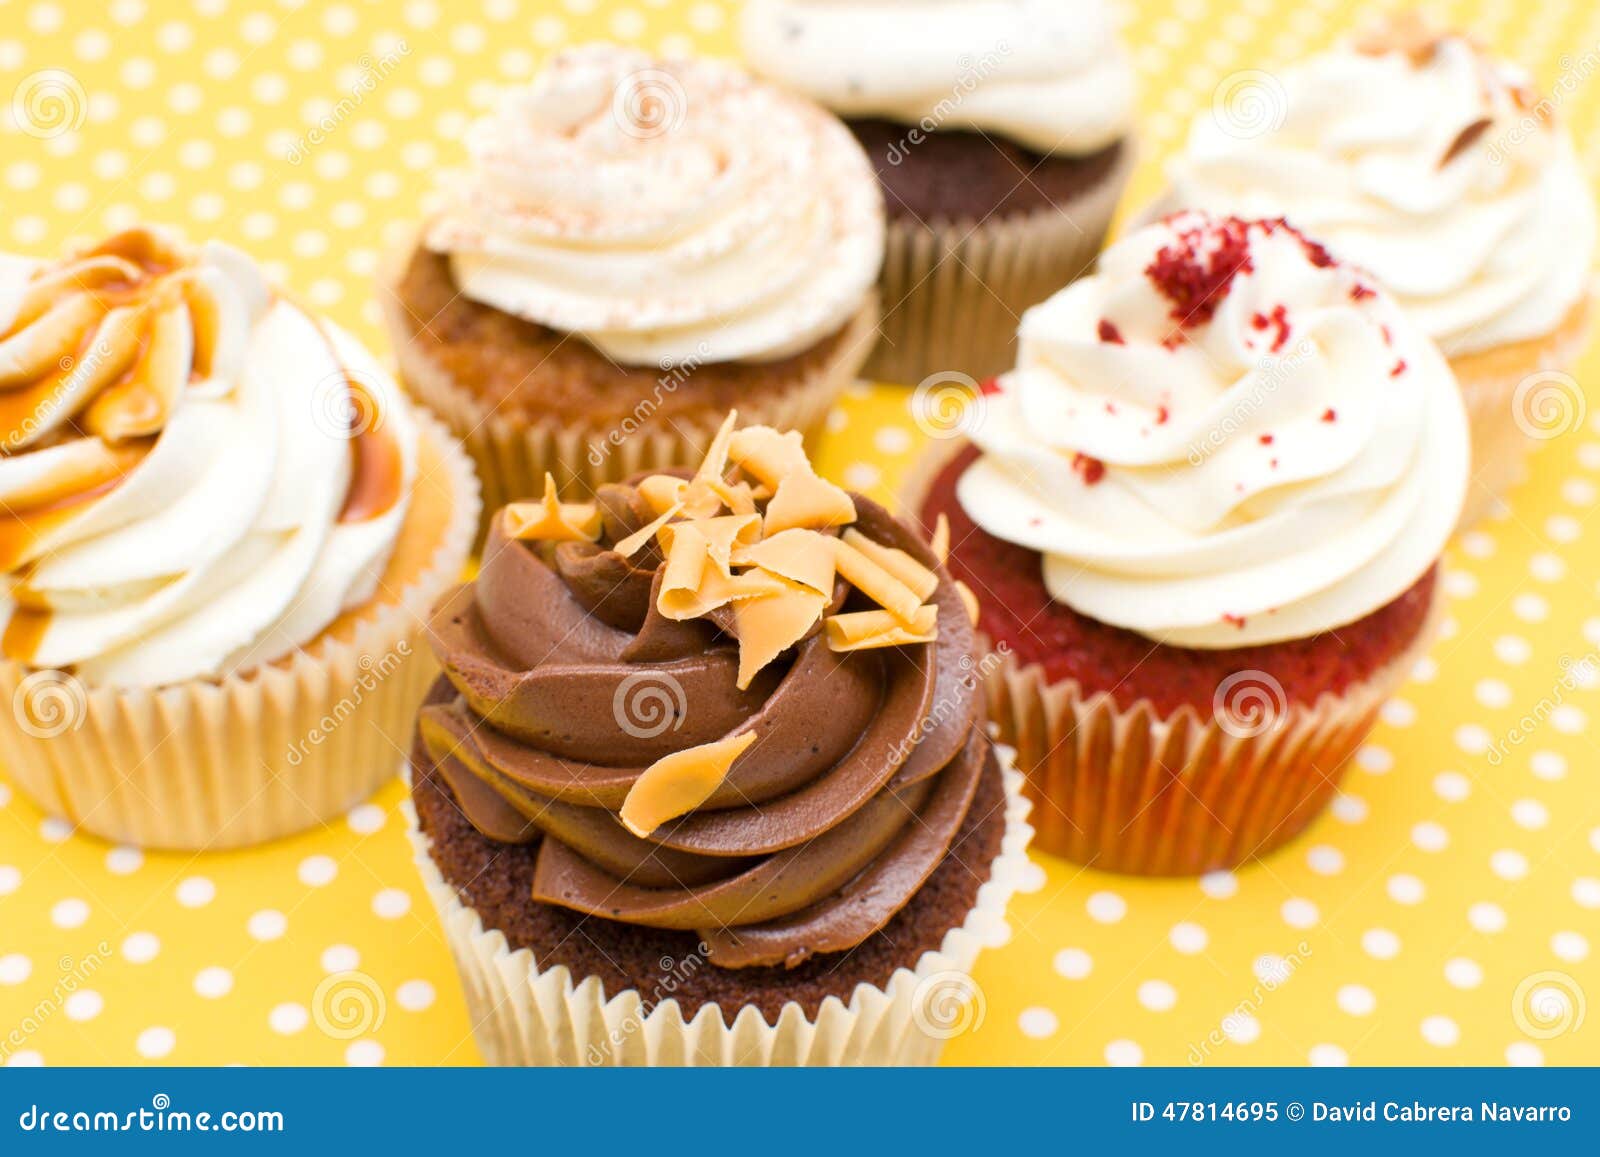 Cupcakes stock image. Image of celebration, treats, love - 47814695